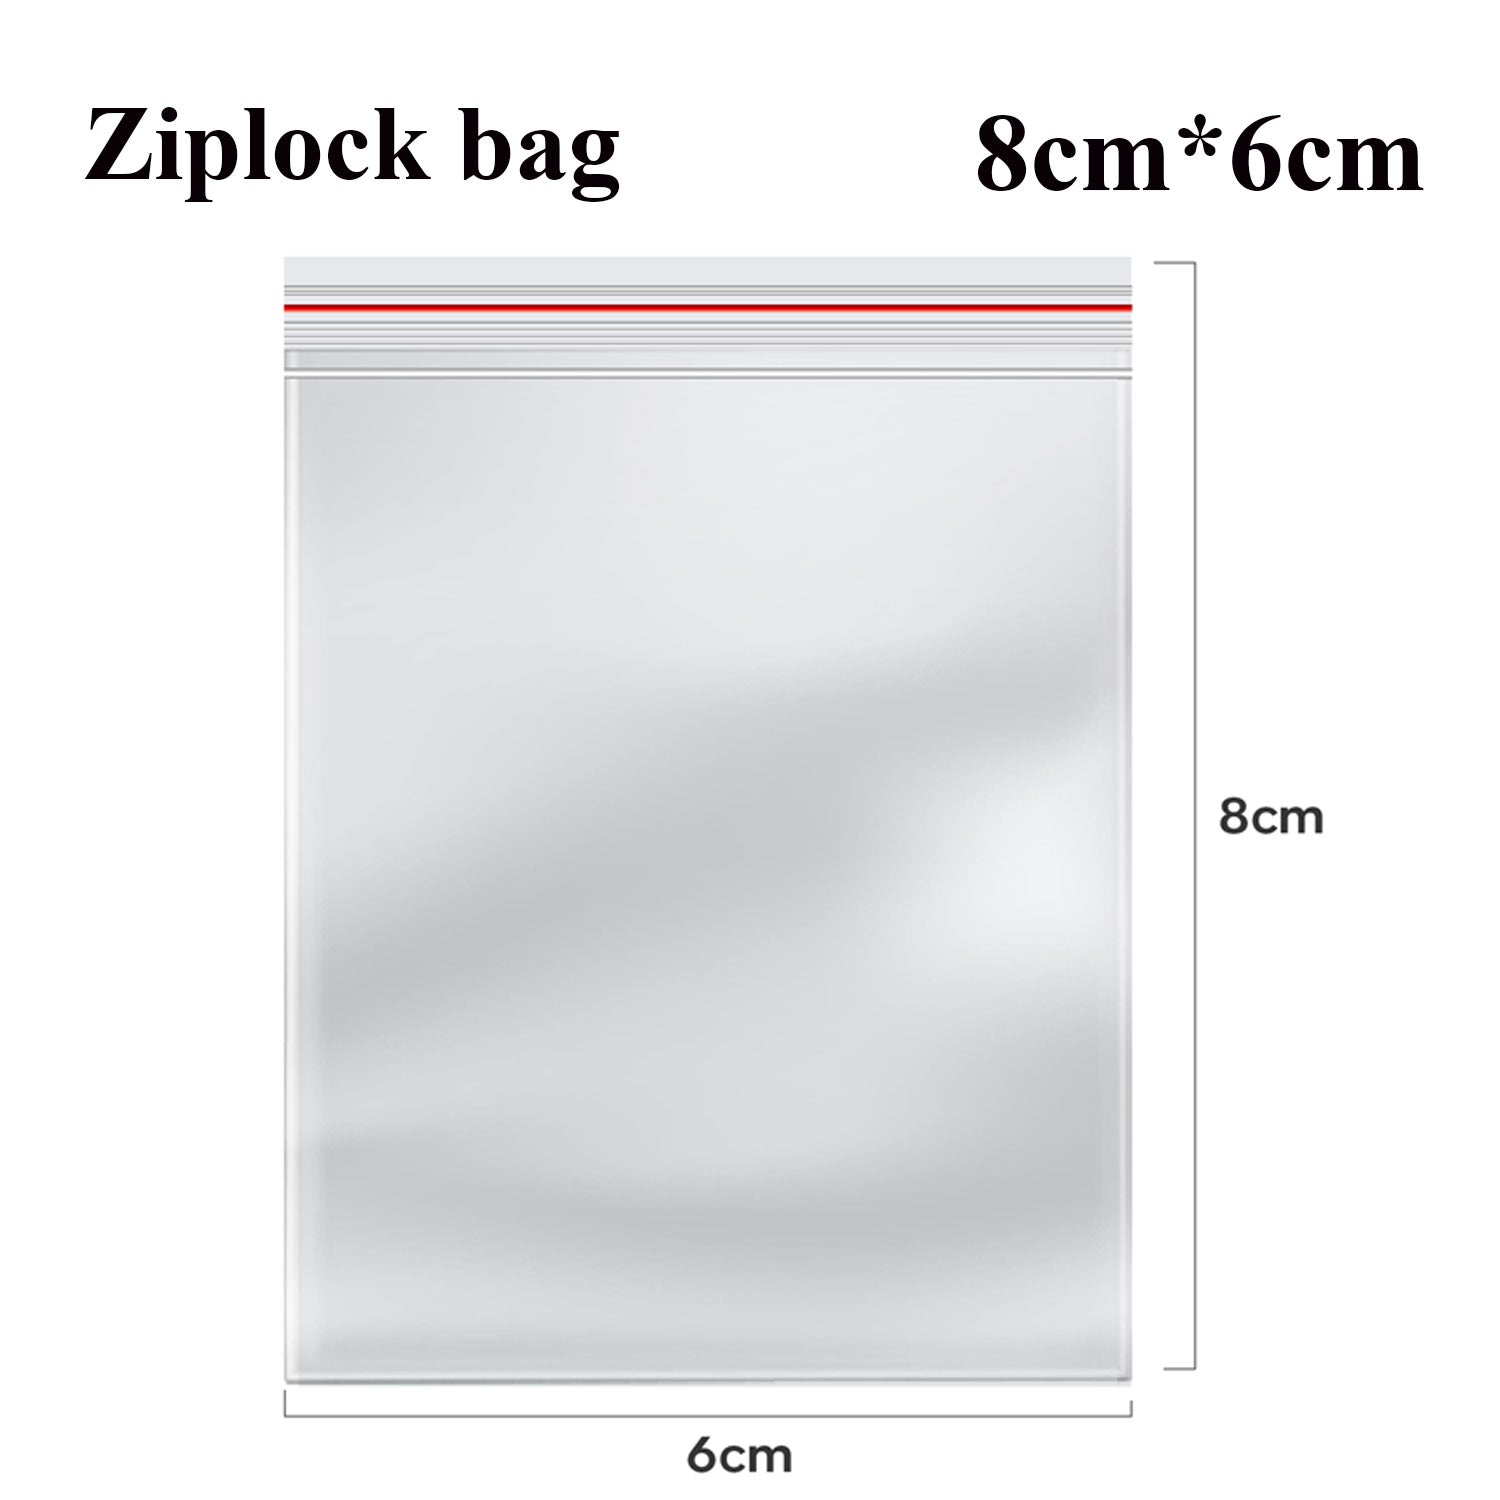 Sealing Ziplock Bag - Size an Dimension.